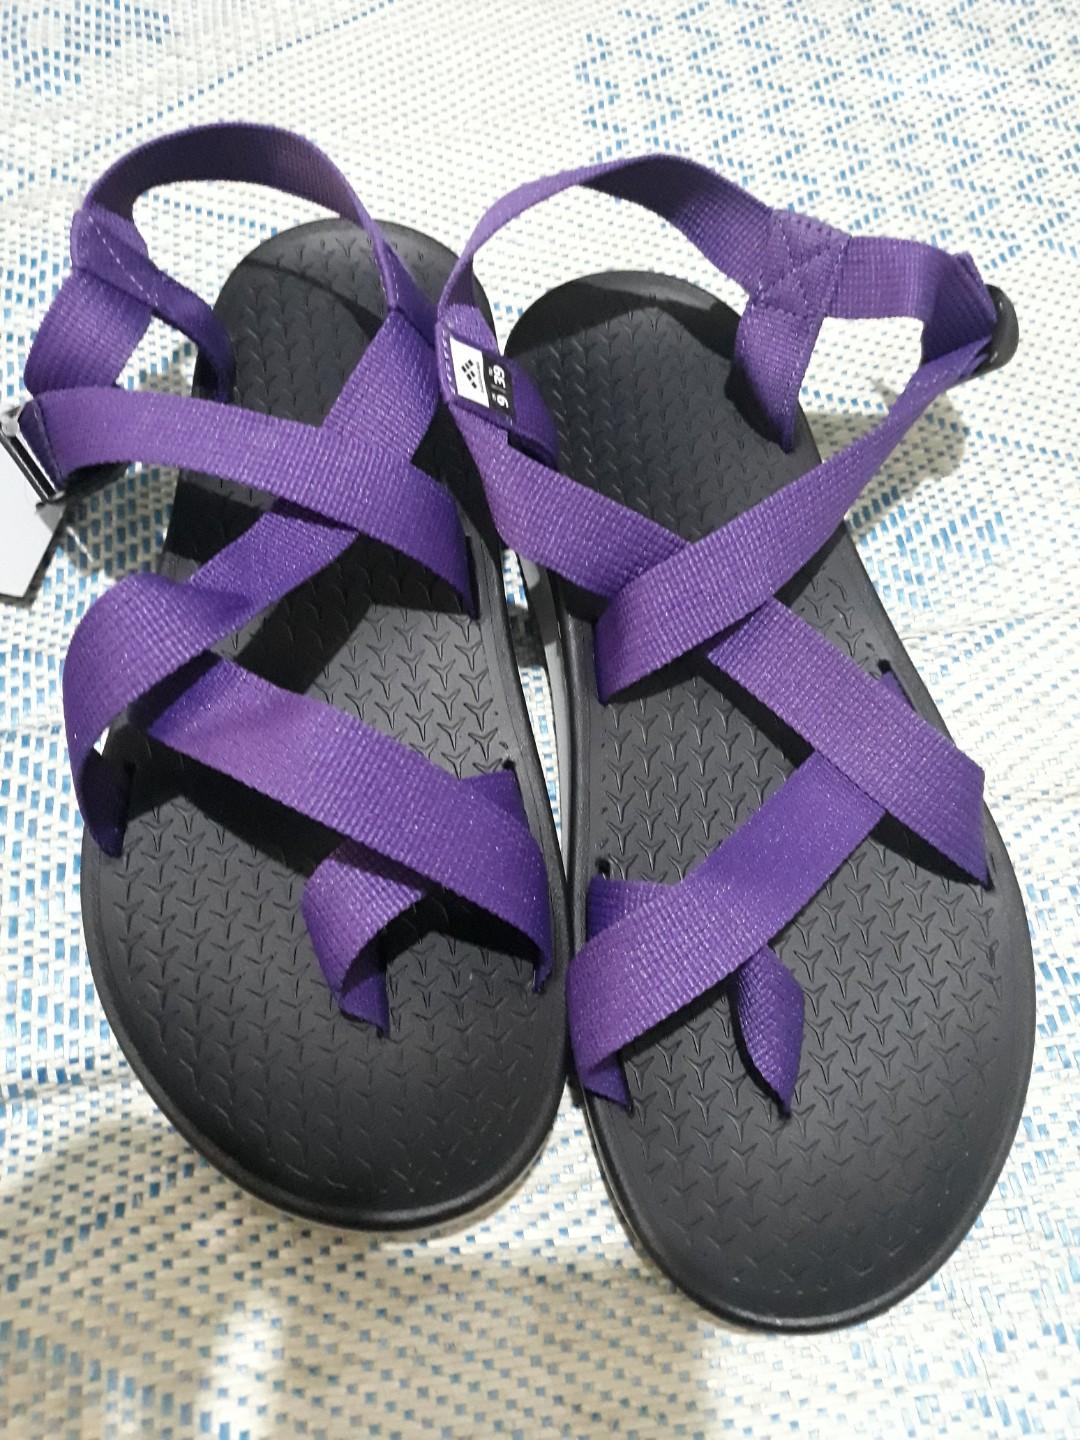 sandugo slippers for ladies